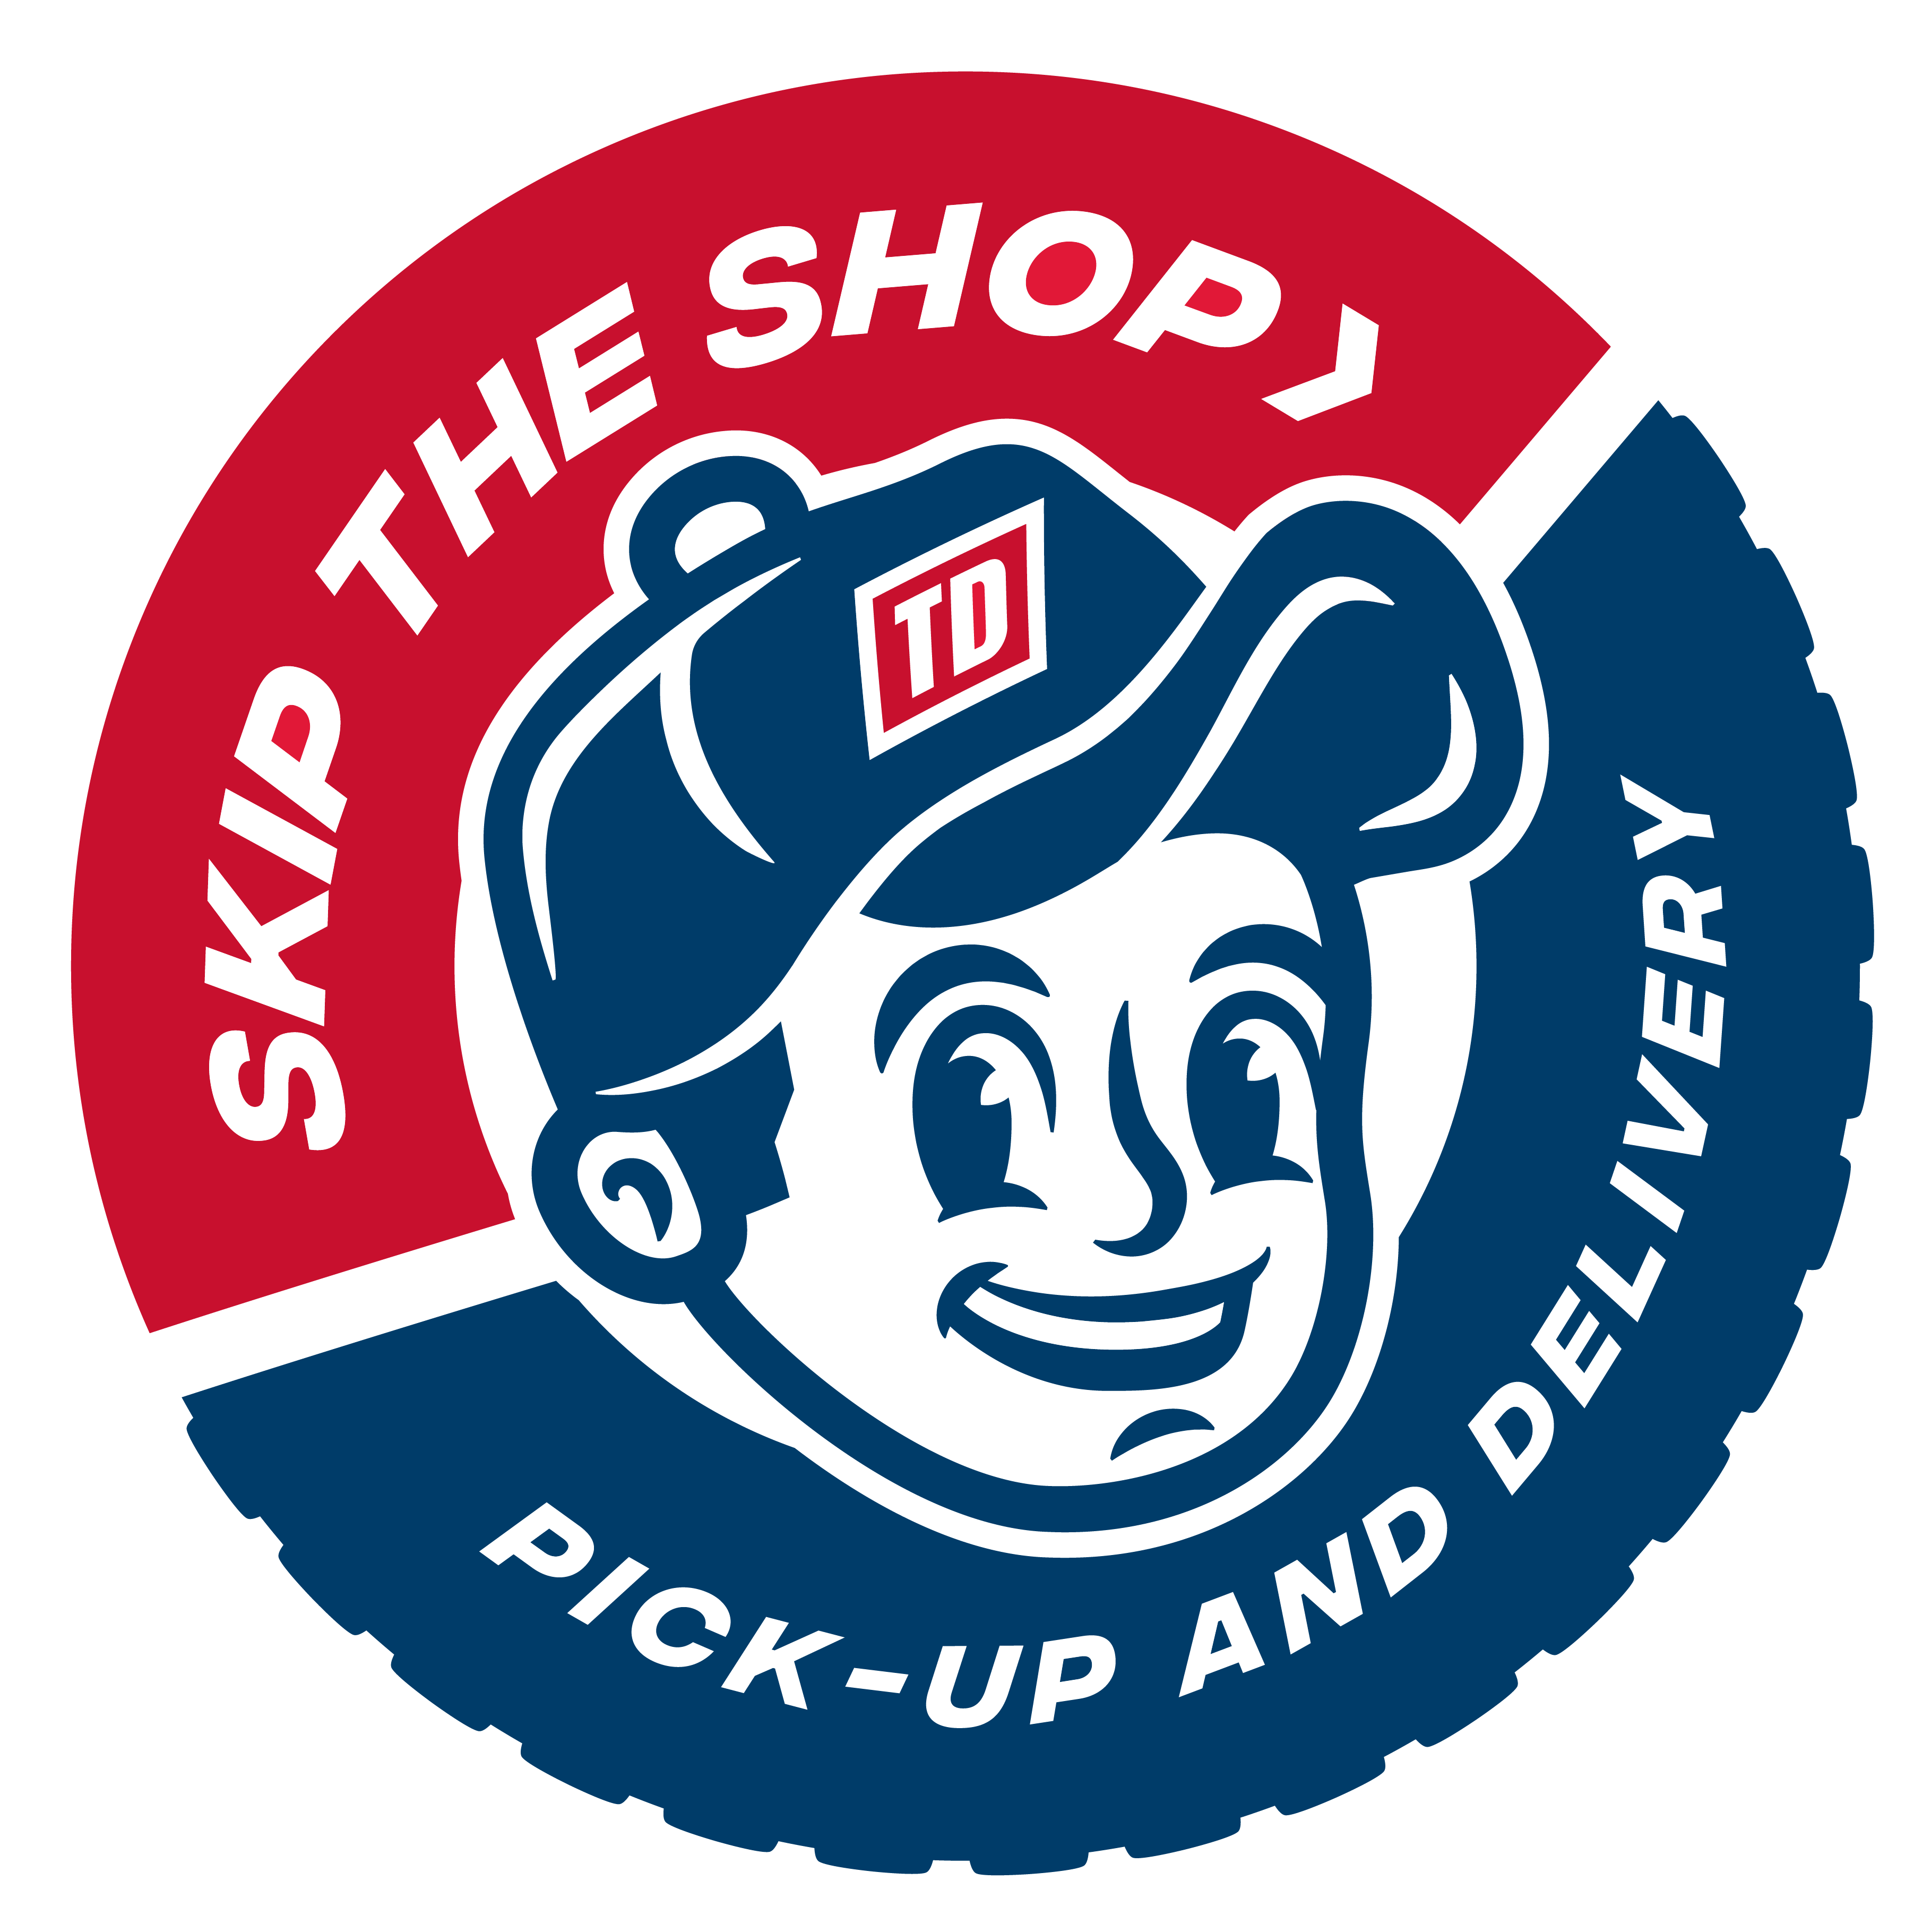 Skip the Shop badge